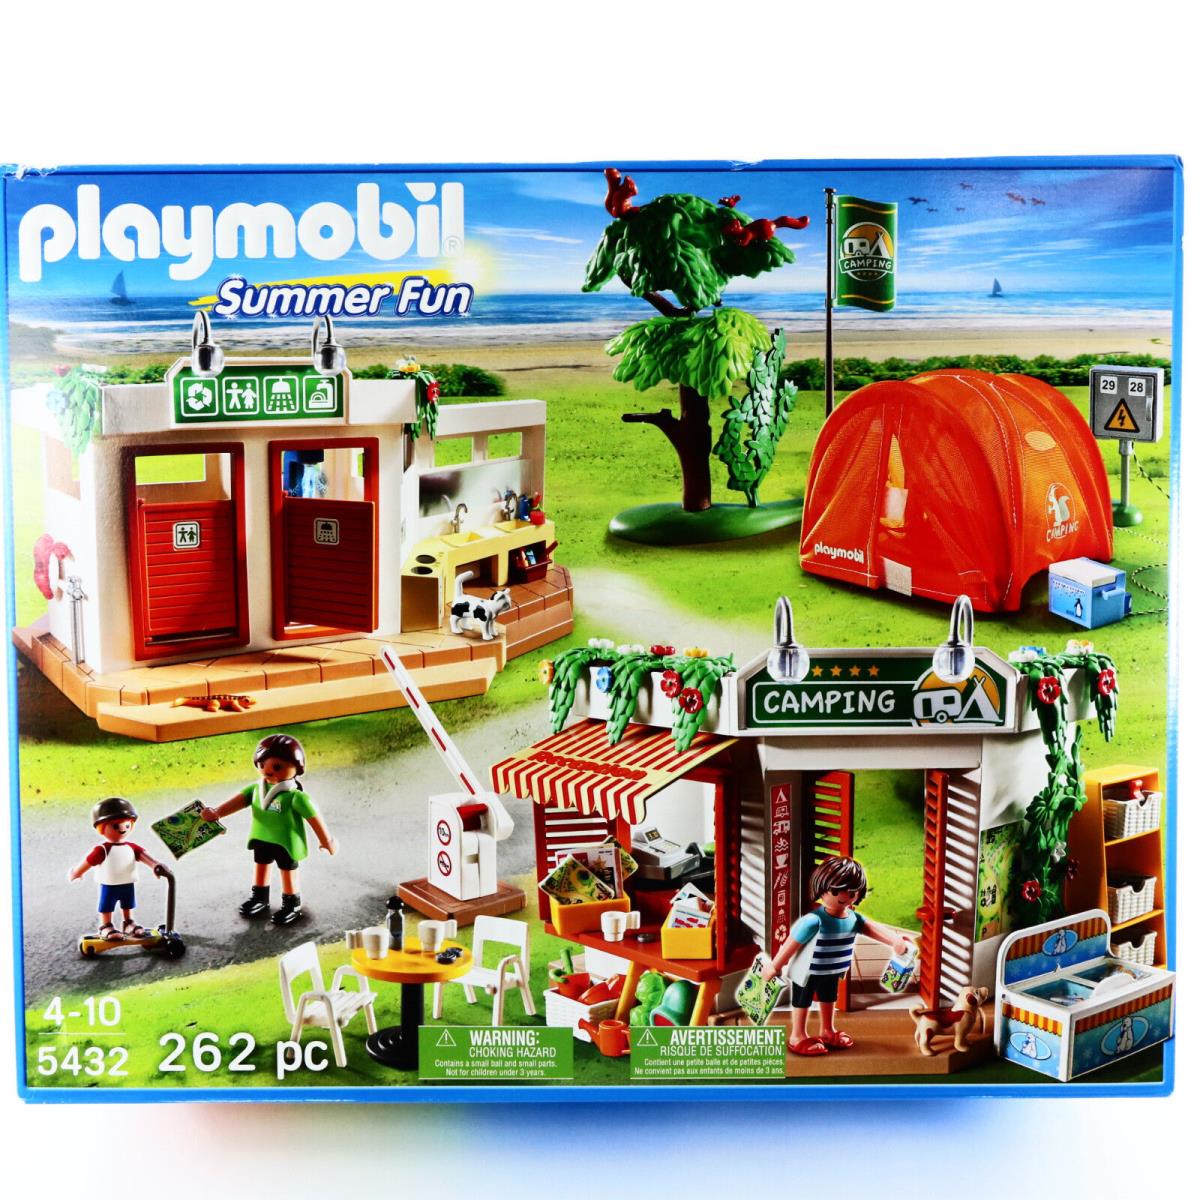 Playmobil Camp Site Summer Fun 5432 Huge Playset Camping Toys Boys Age 4 5 6 7 8